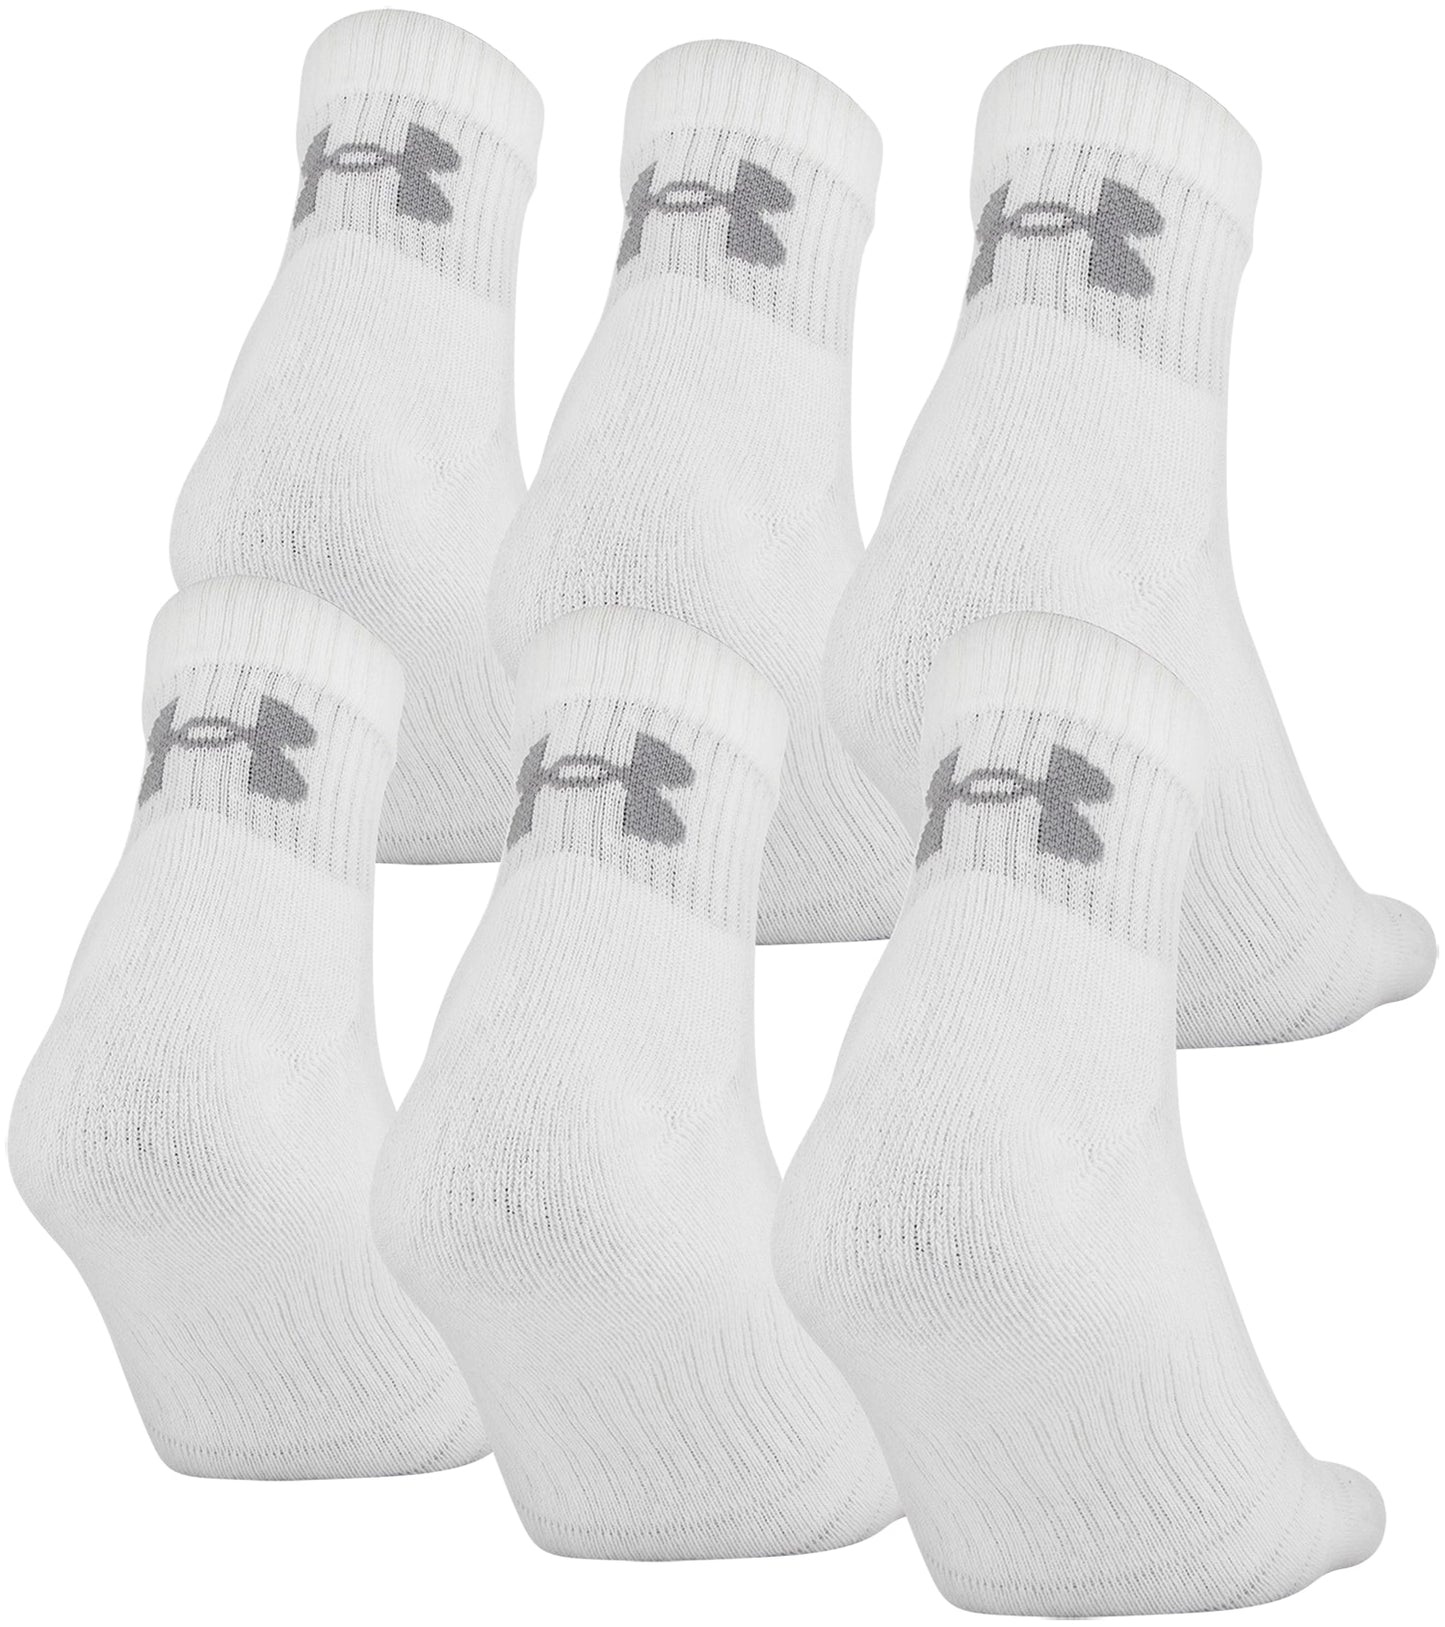 UA Adult's Training Cotton Quarter 6-Pack Socks